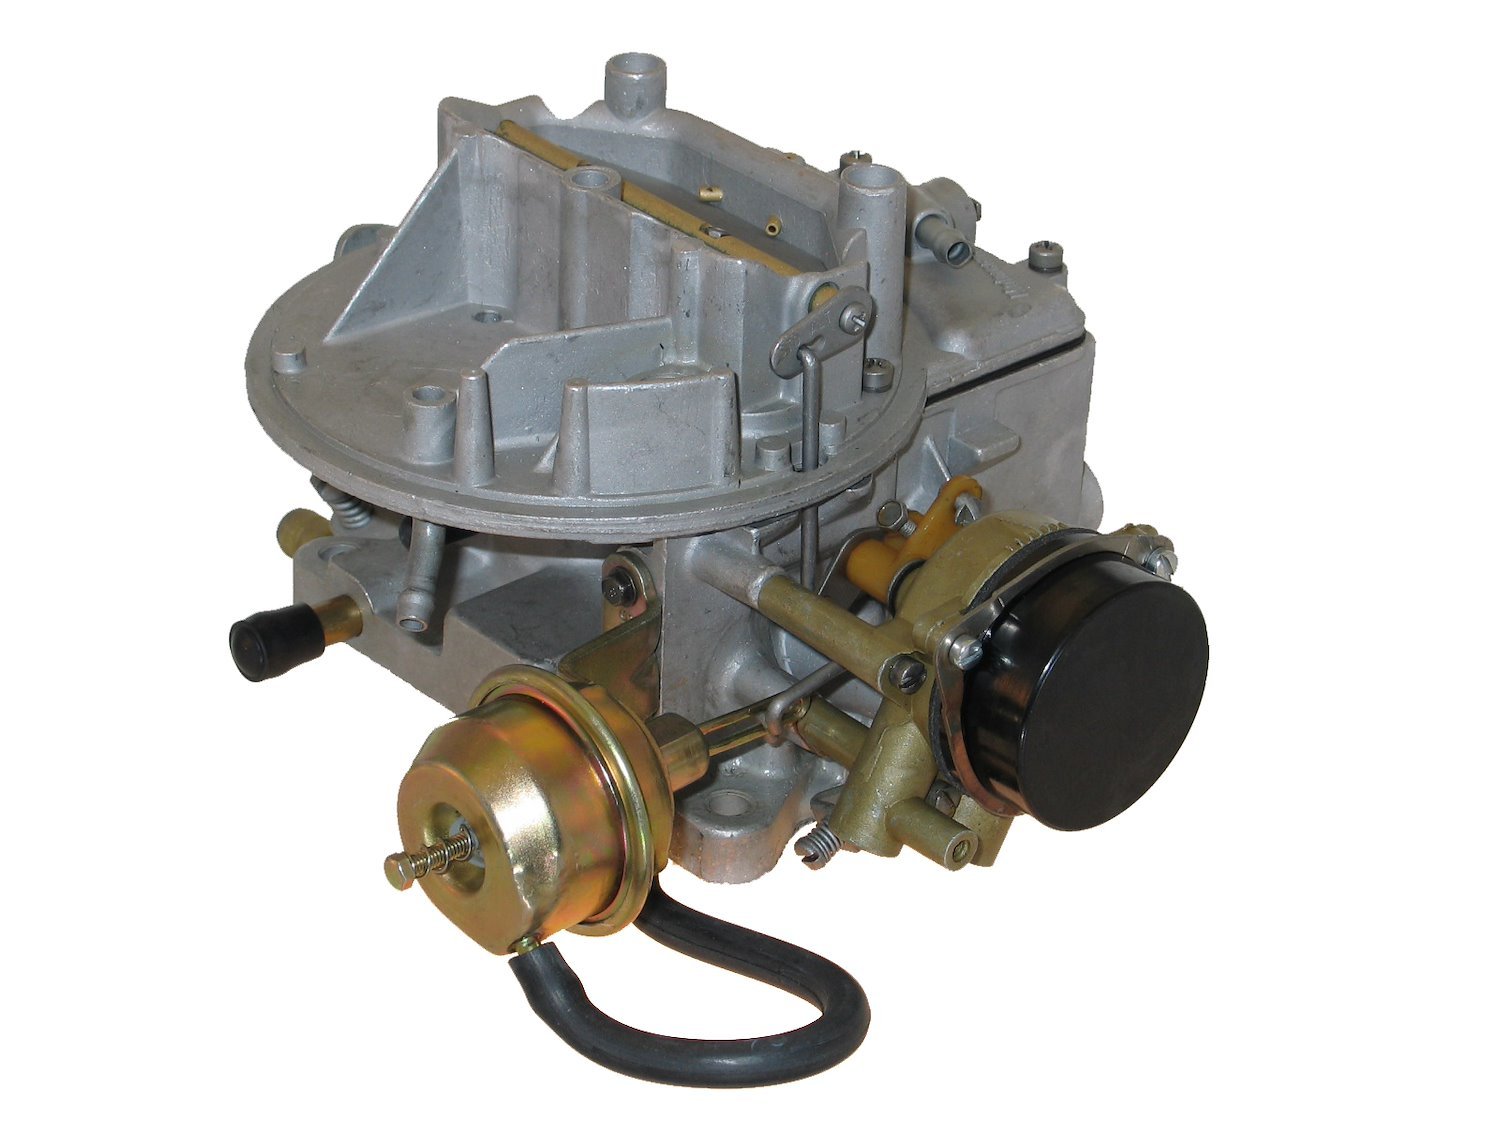 7-7551 Motorcraft Remanufactured Carburetor, 2150-Style